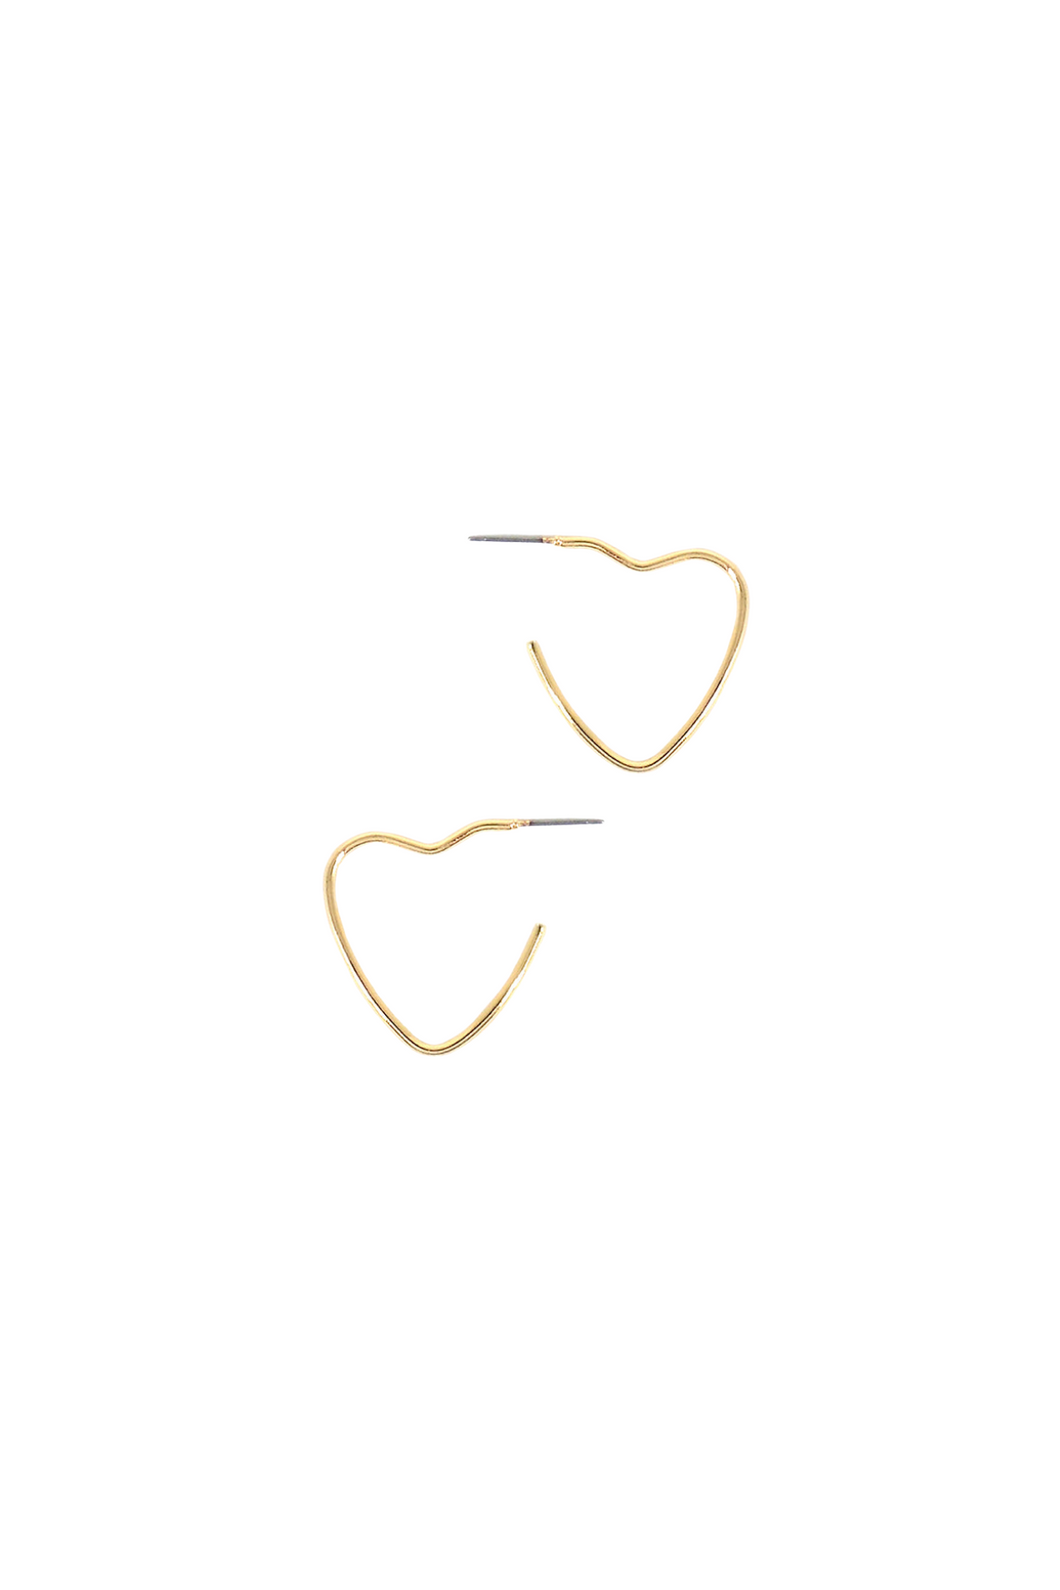 Polished Gold Heart Earring